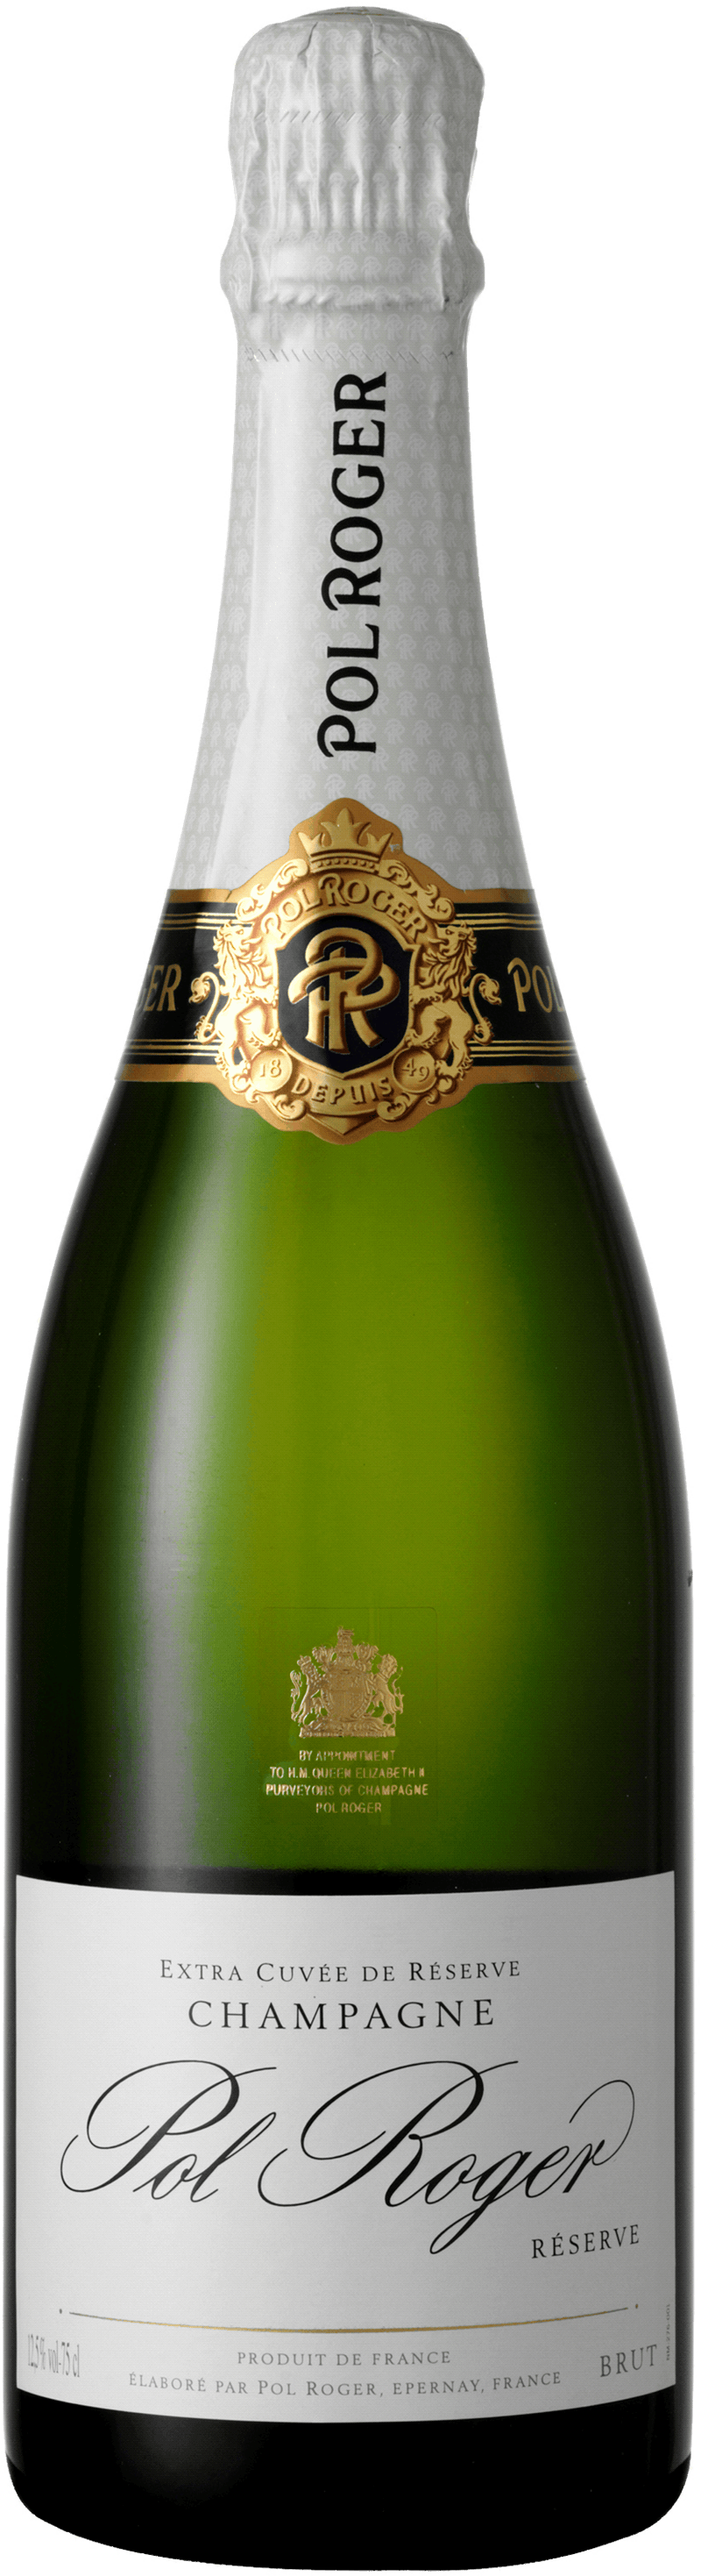 An image of a bottle of Pol Roger Brut Réserve Champagne 750ml. served at meghan & Harry's royal wedding reception.